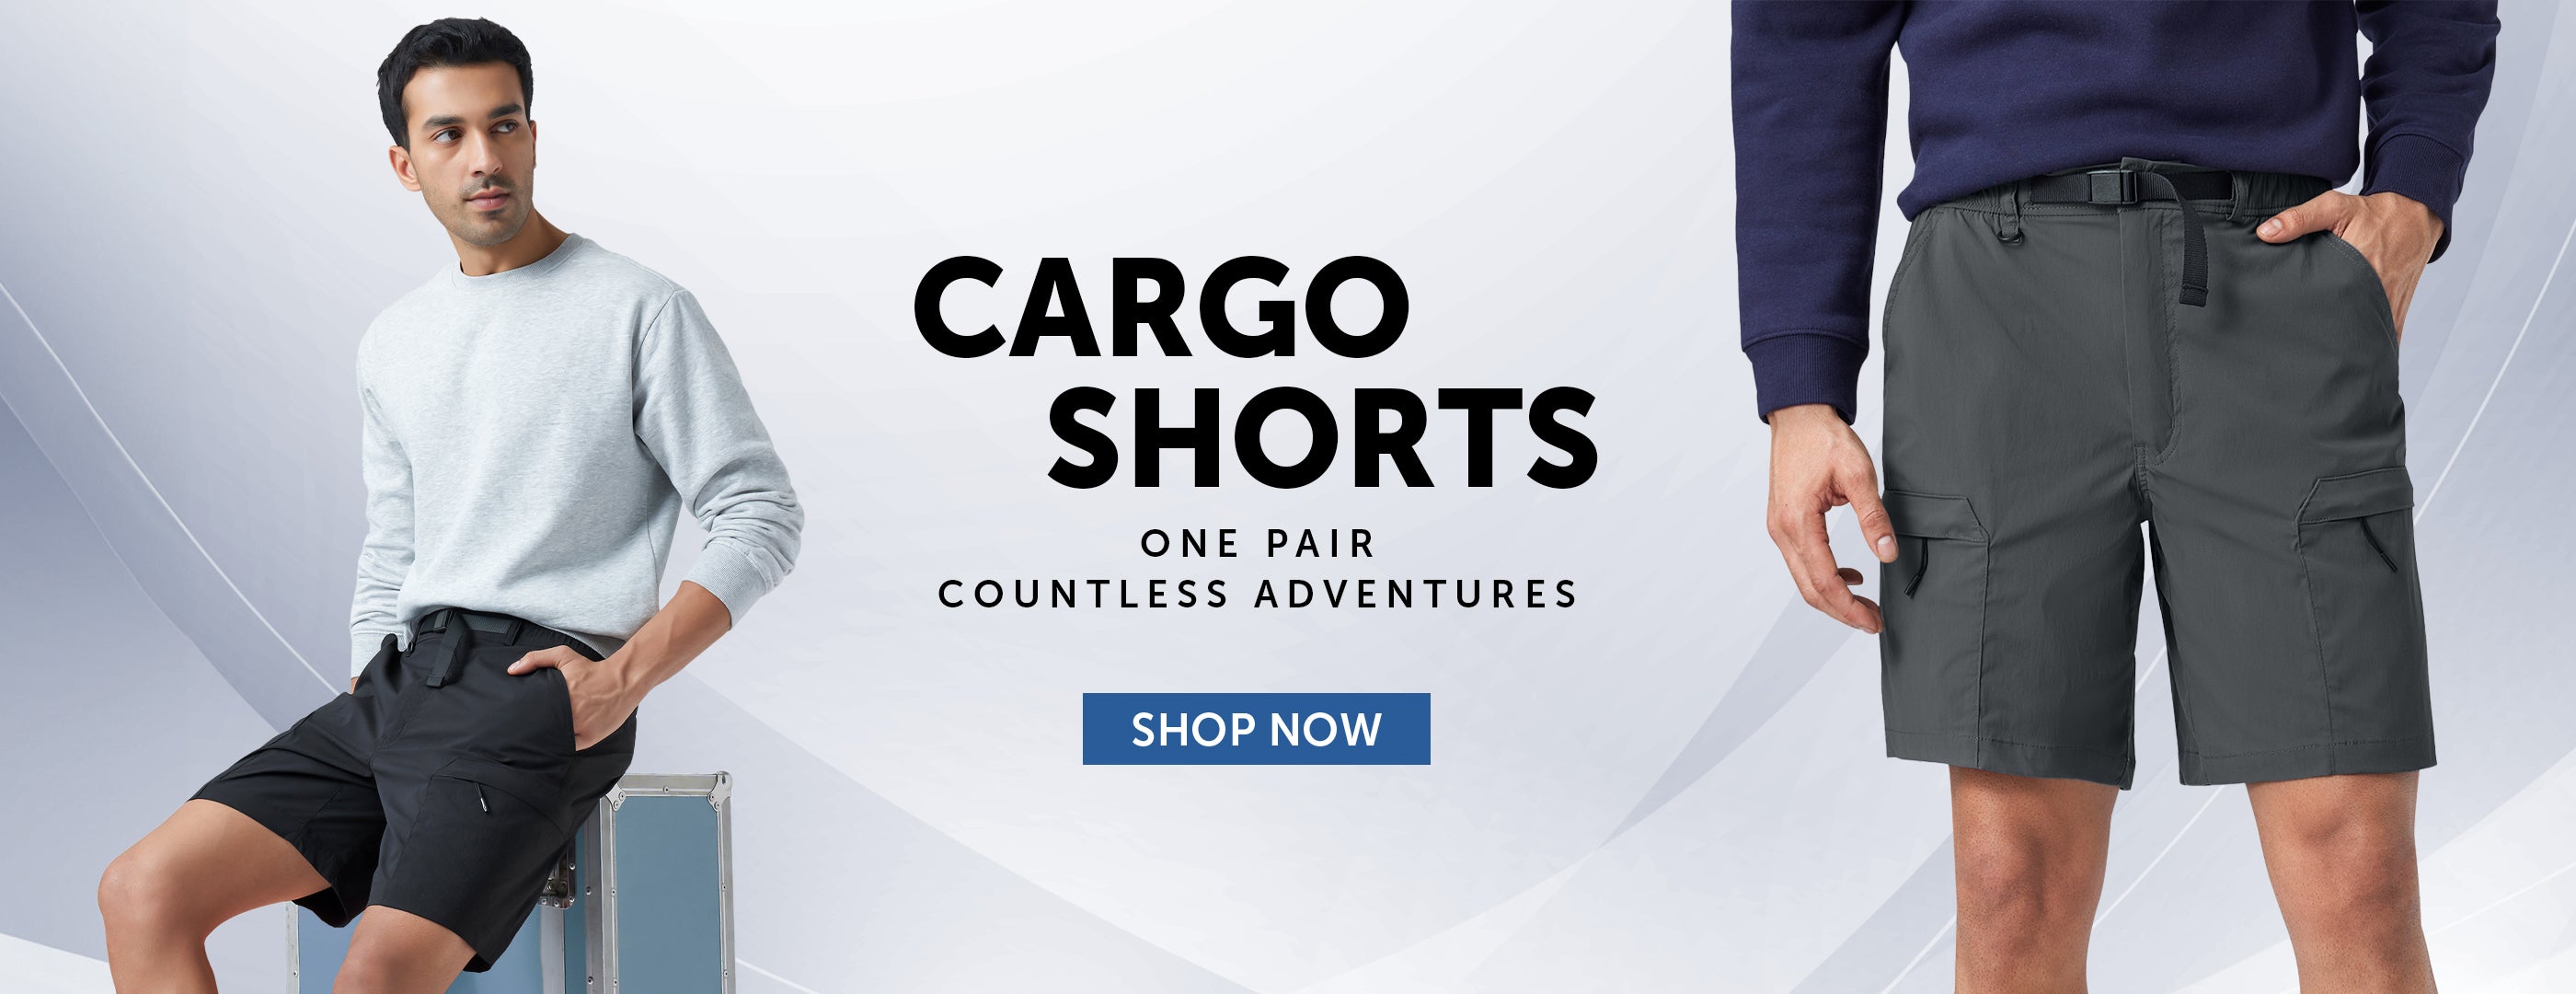 homepage-banner-chino-shorts-dekstop